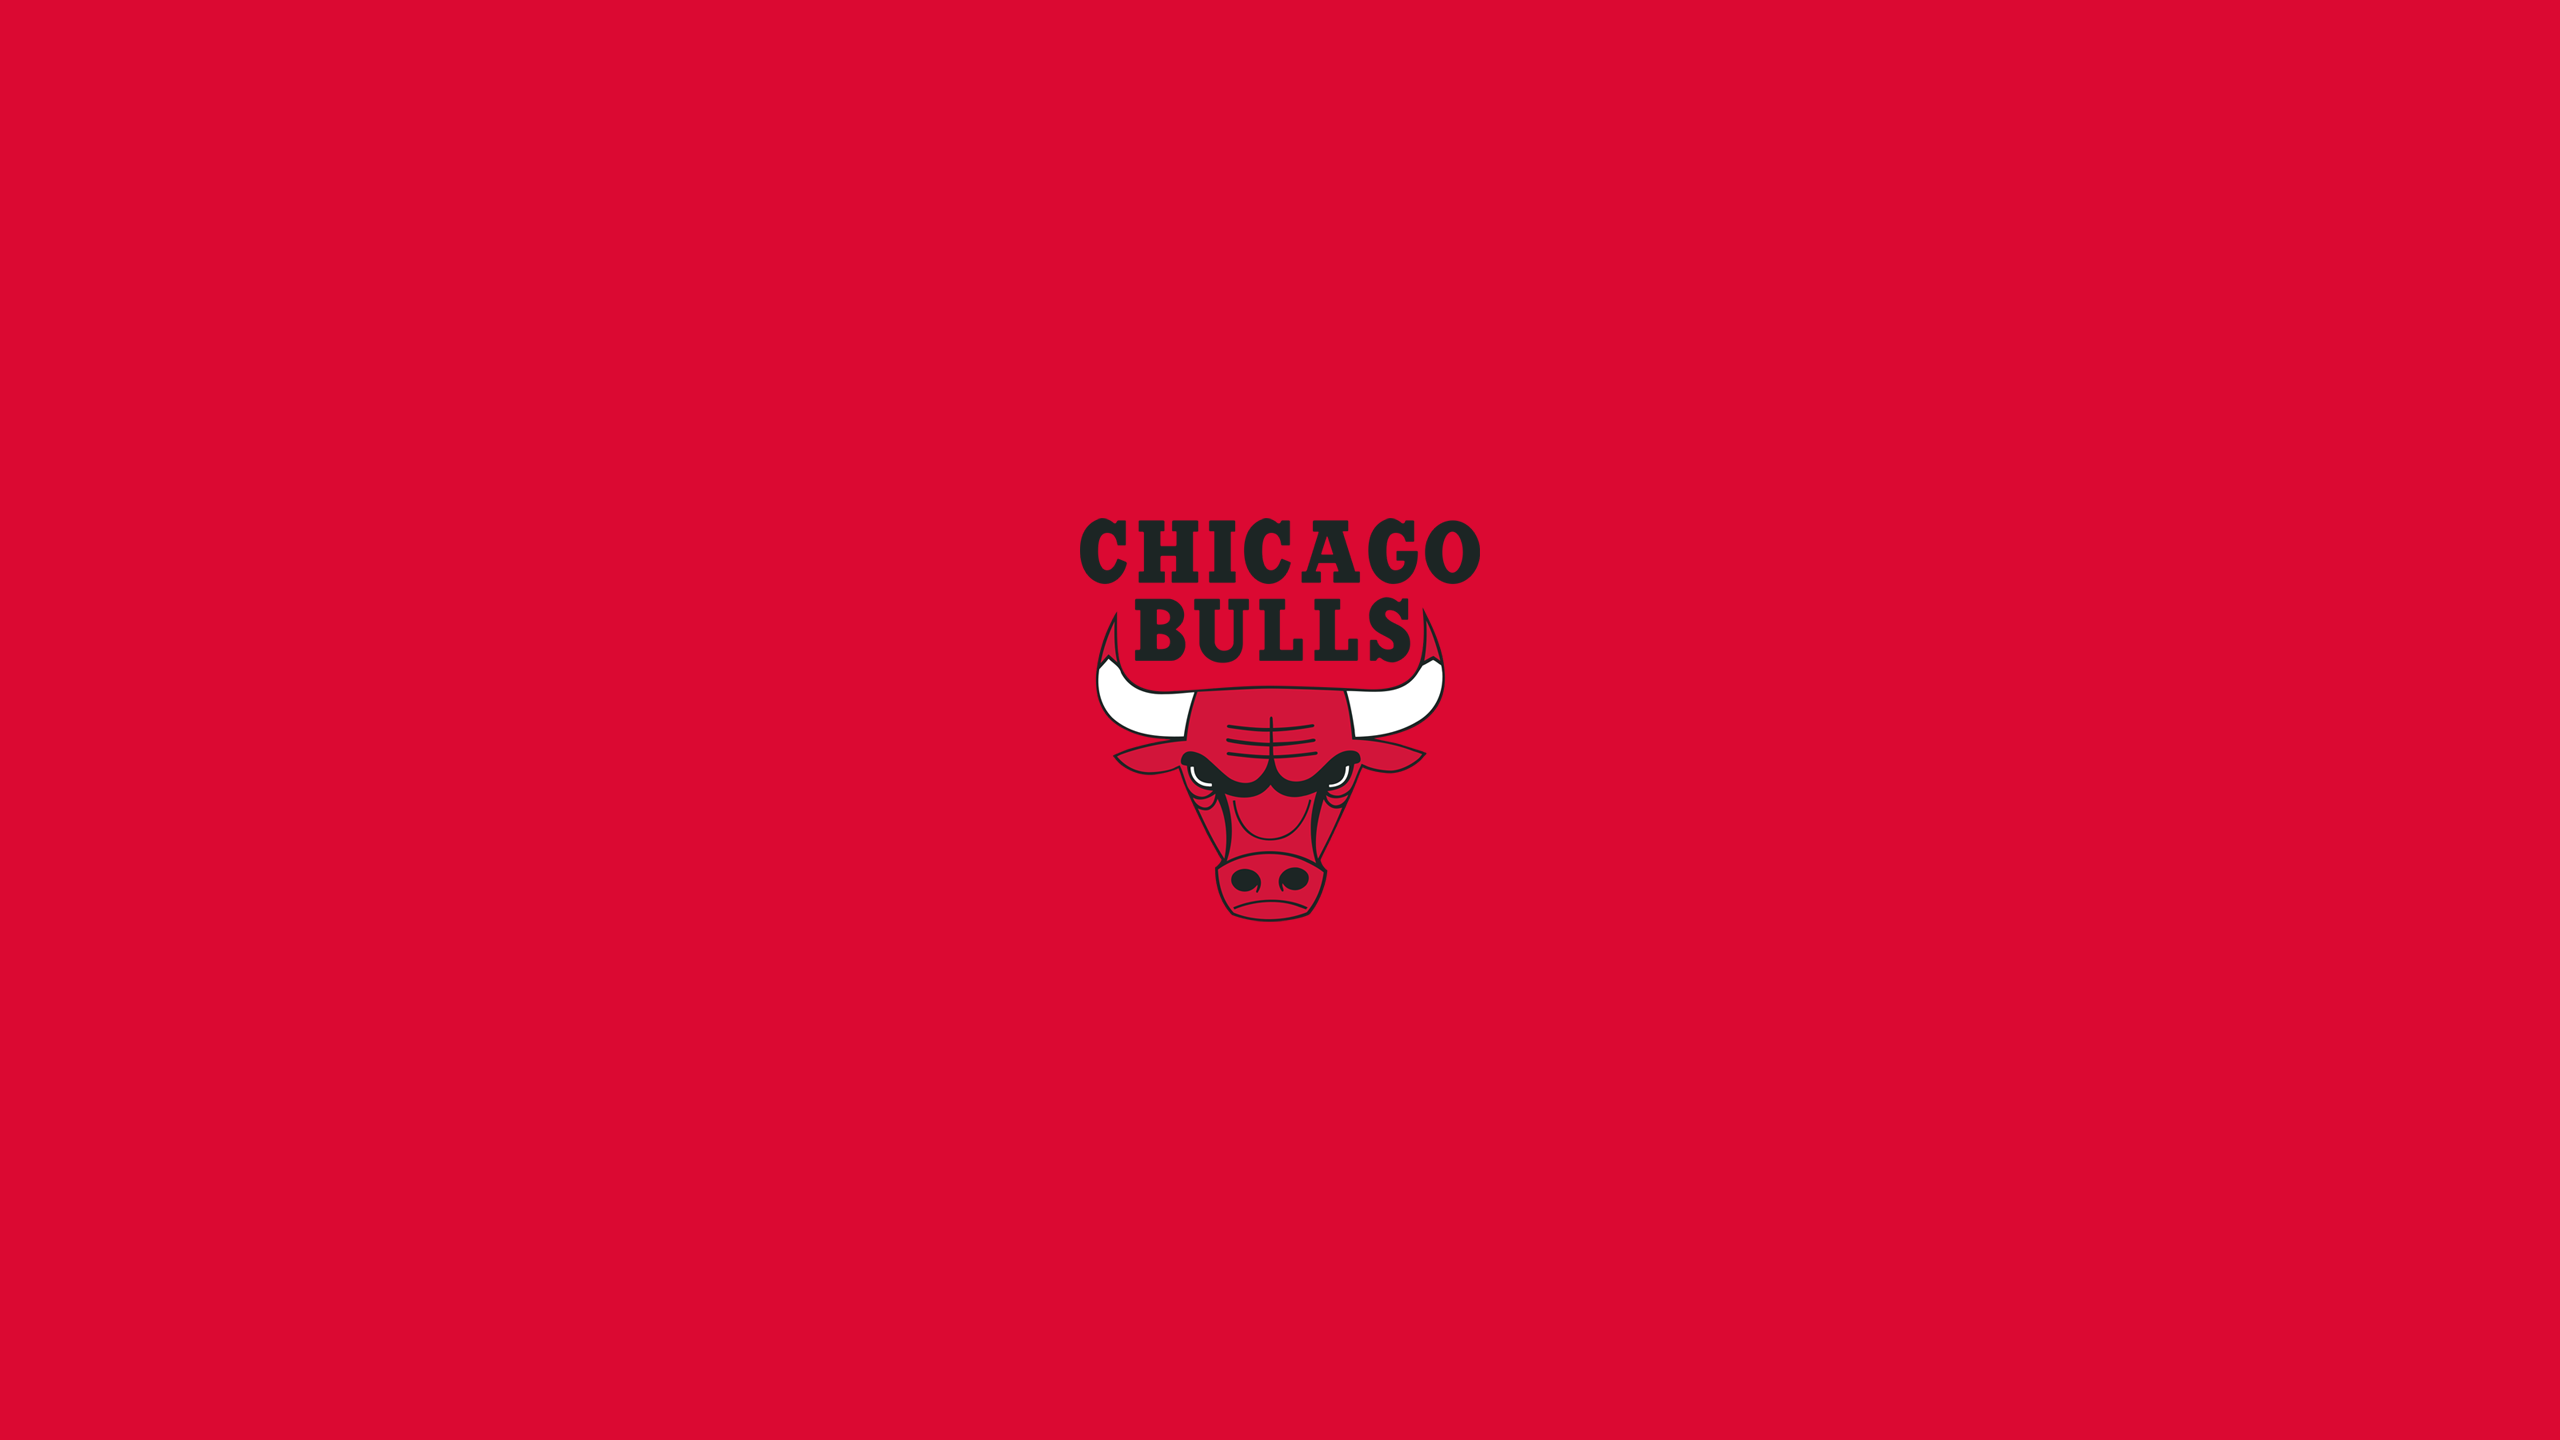 Chicago Bulls - Square Bettor